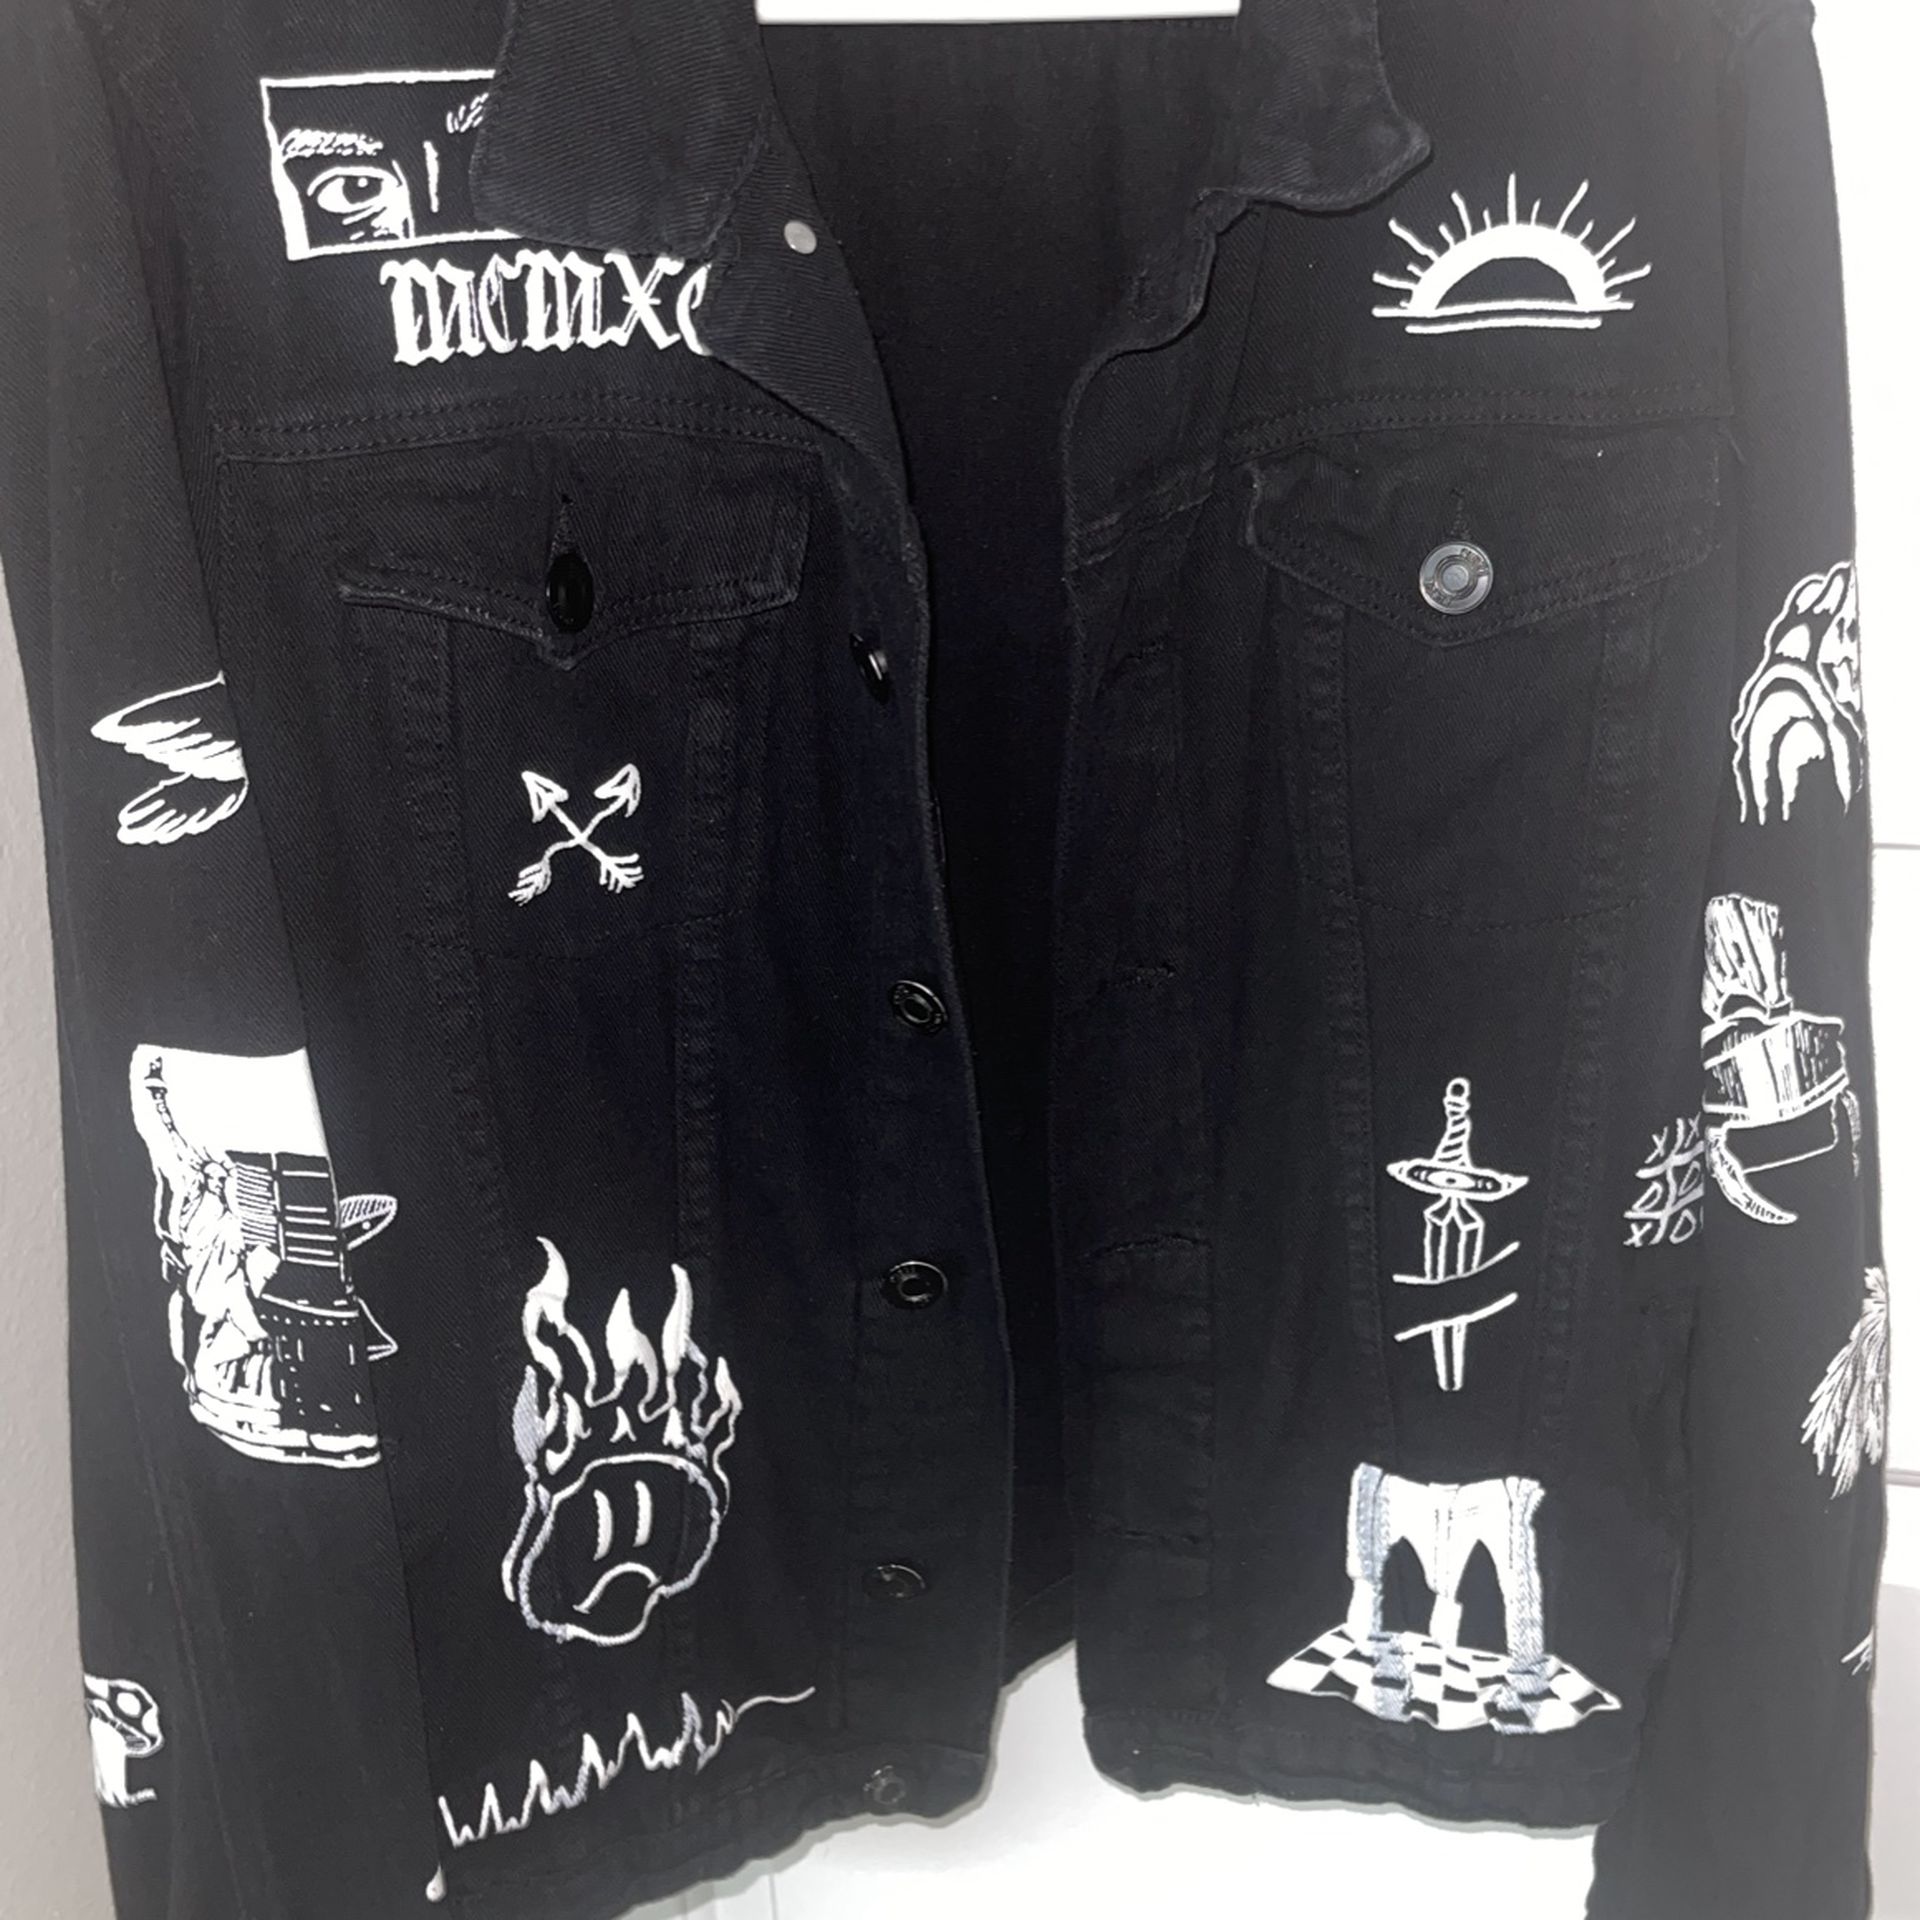 Stylish Black Jean Jacket